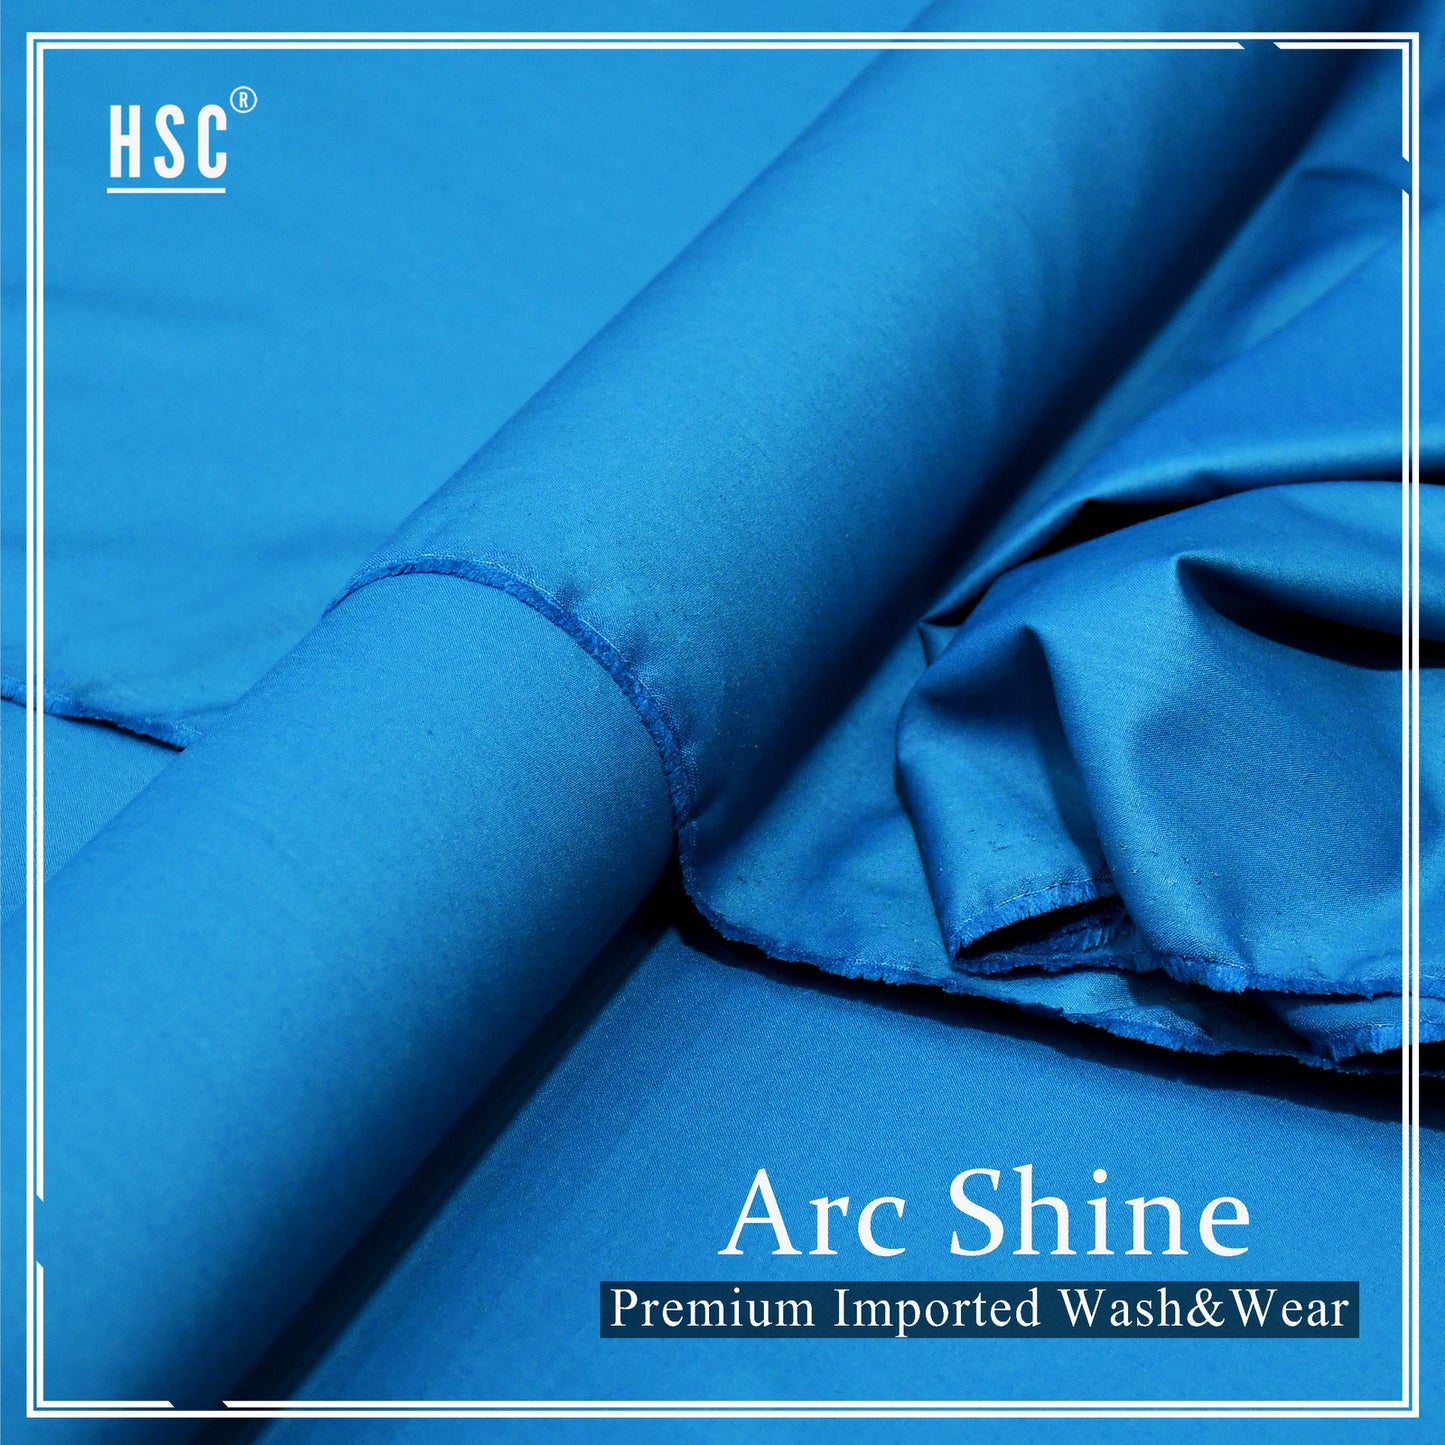 Premium Imported Wash&Wear - IT05 HSC